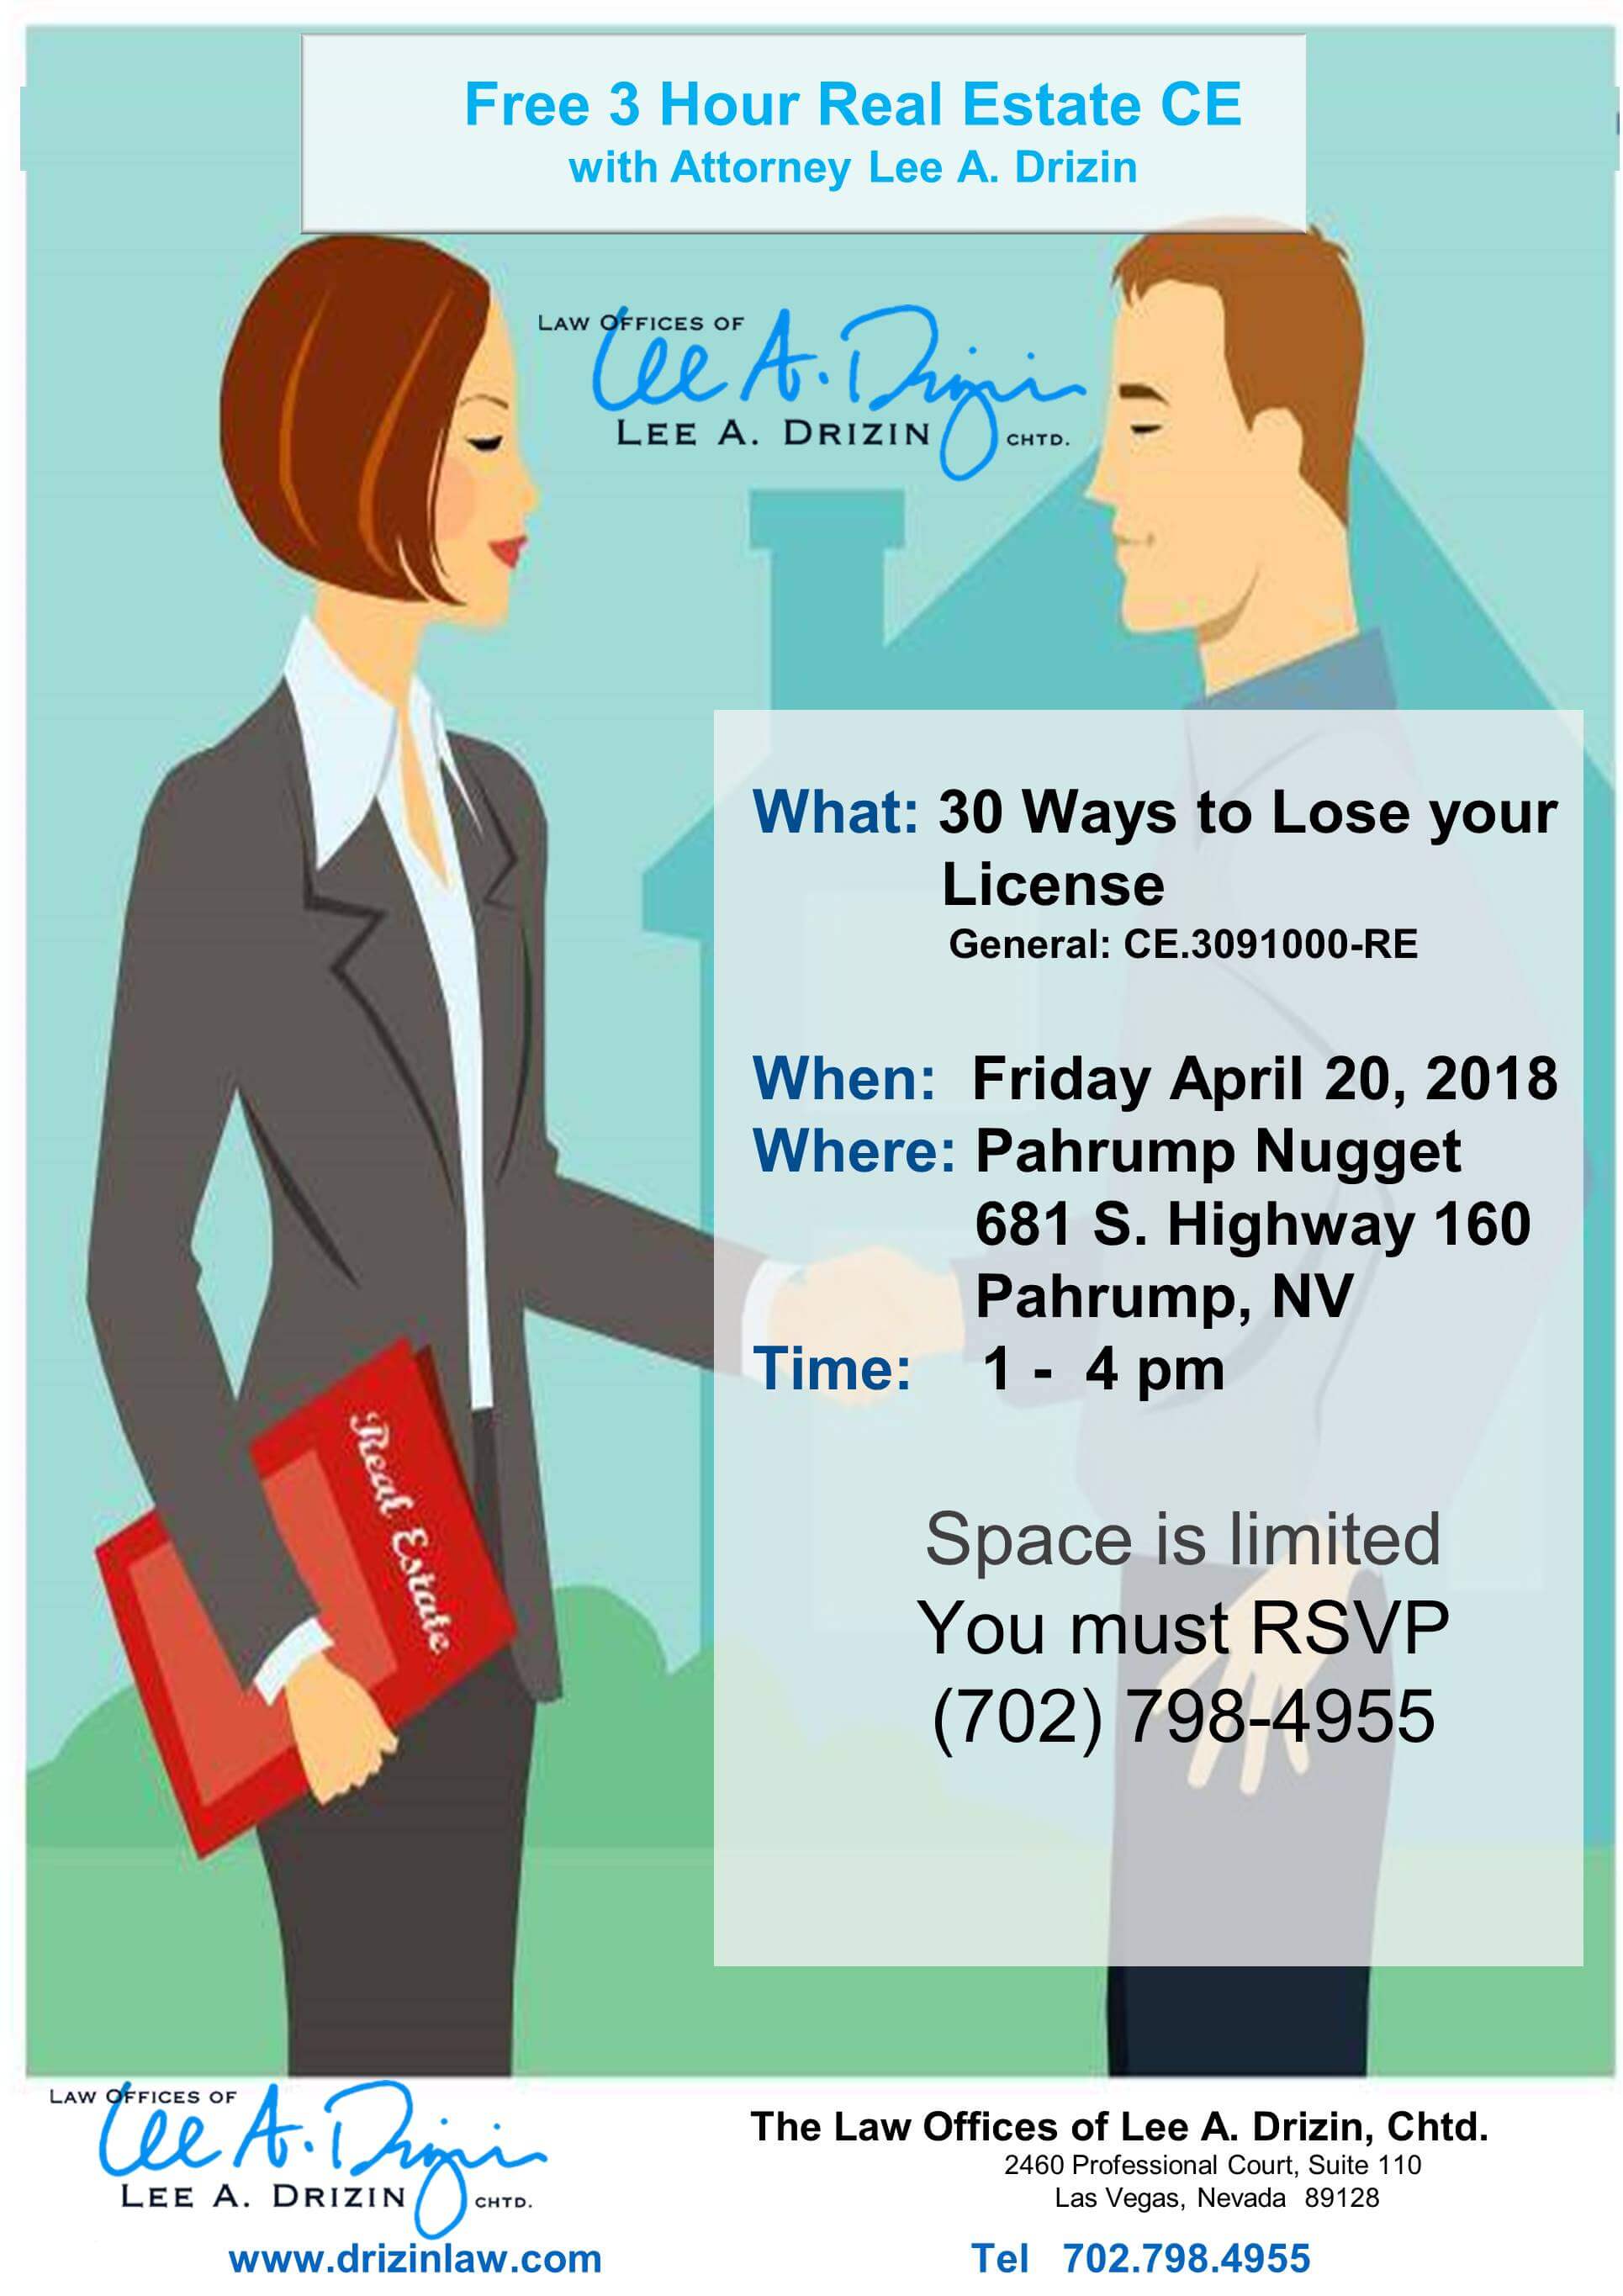 30 Ways to Lose Your License - April 20, 2018 Pahrump, Nevada